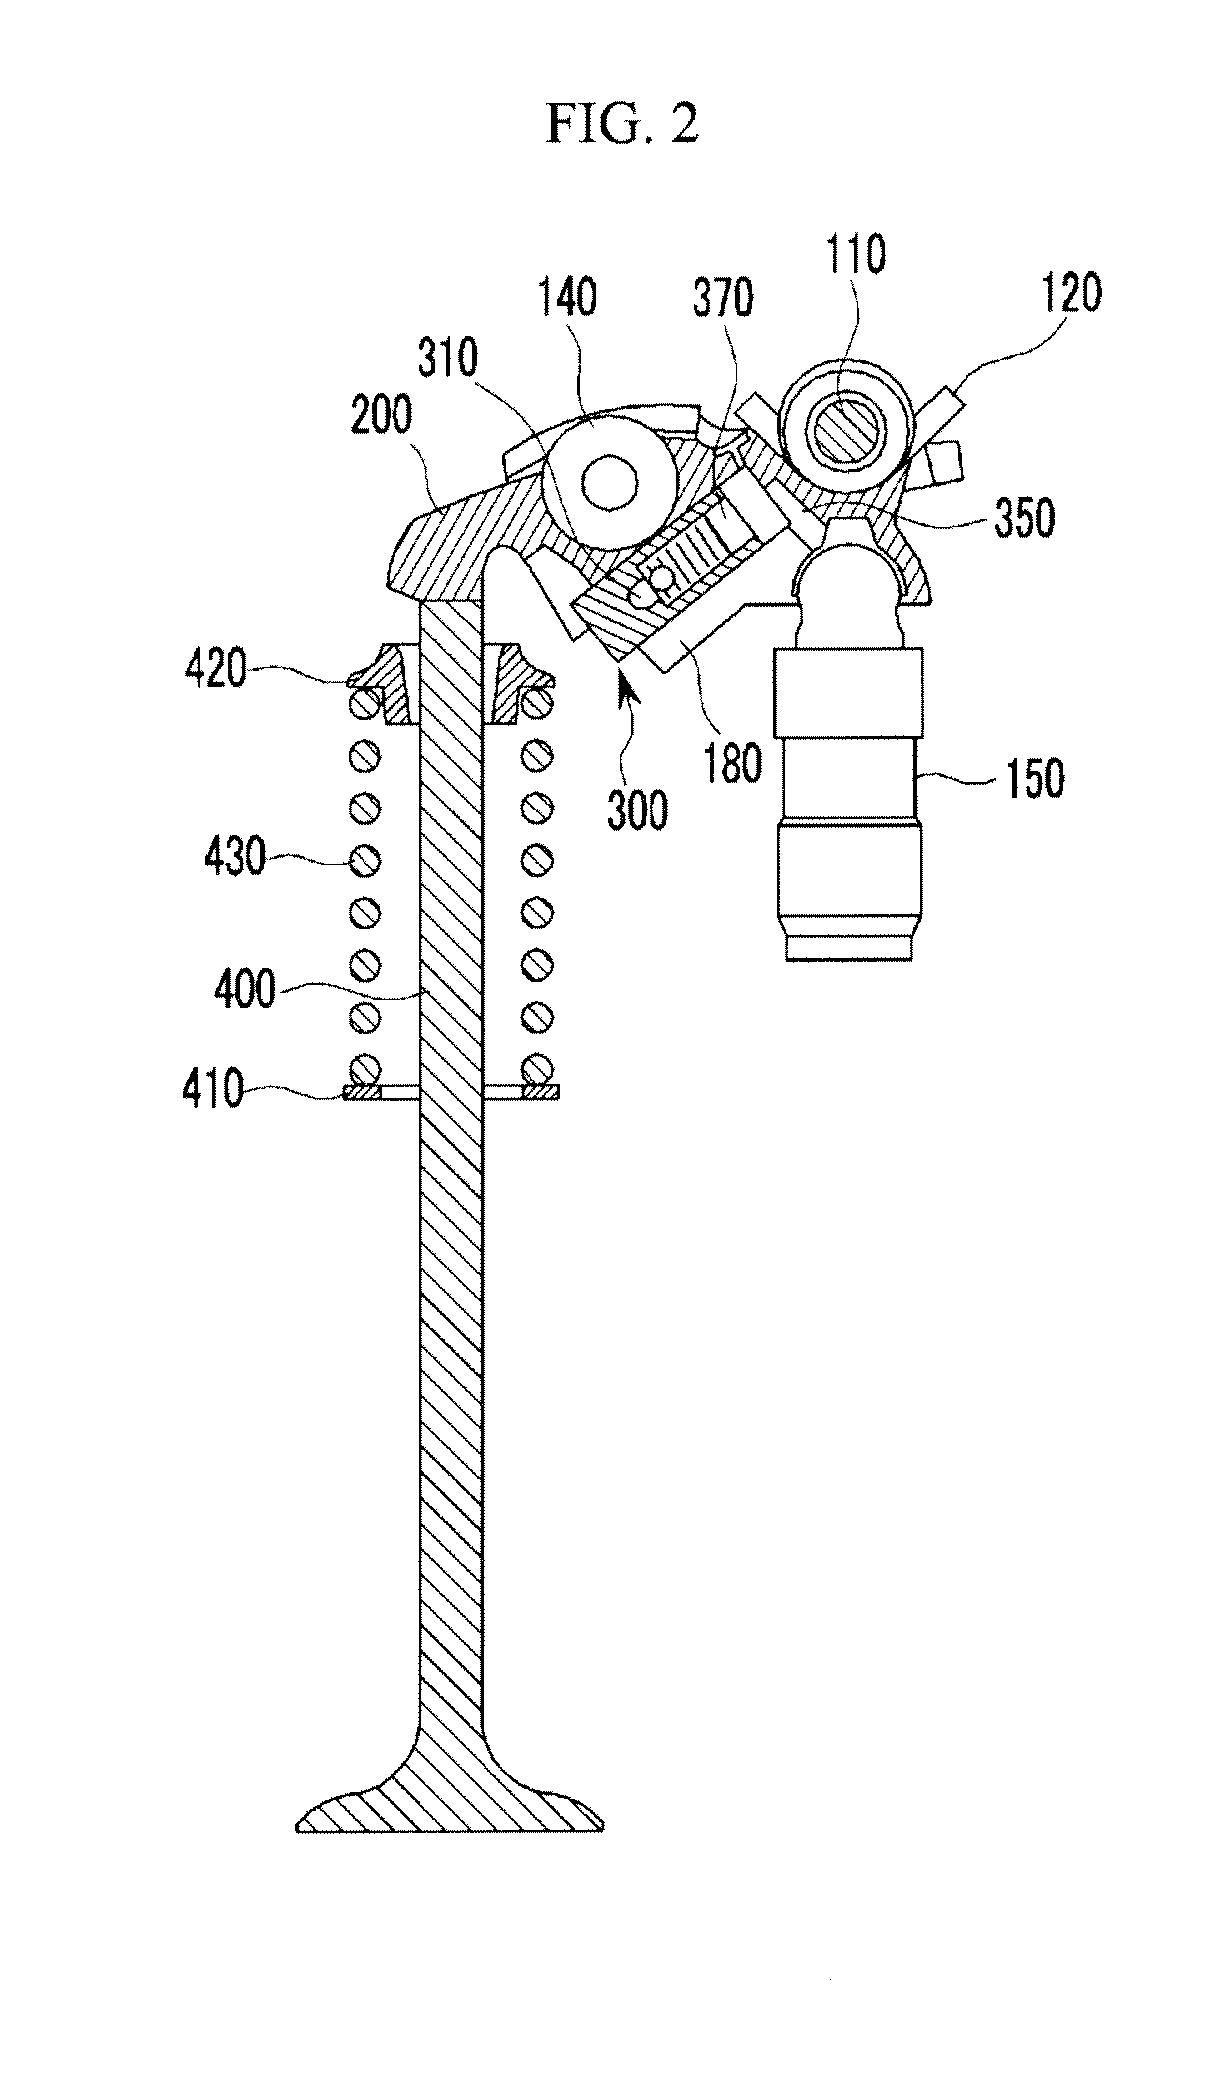 Variable valve lift apparatus